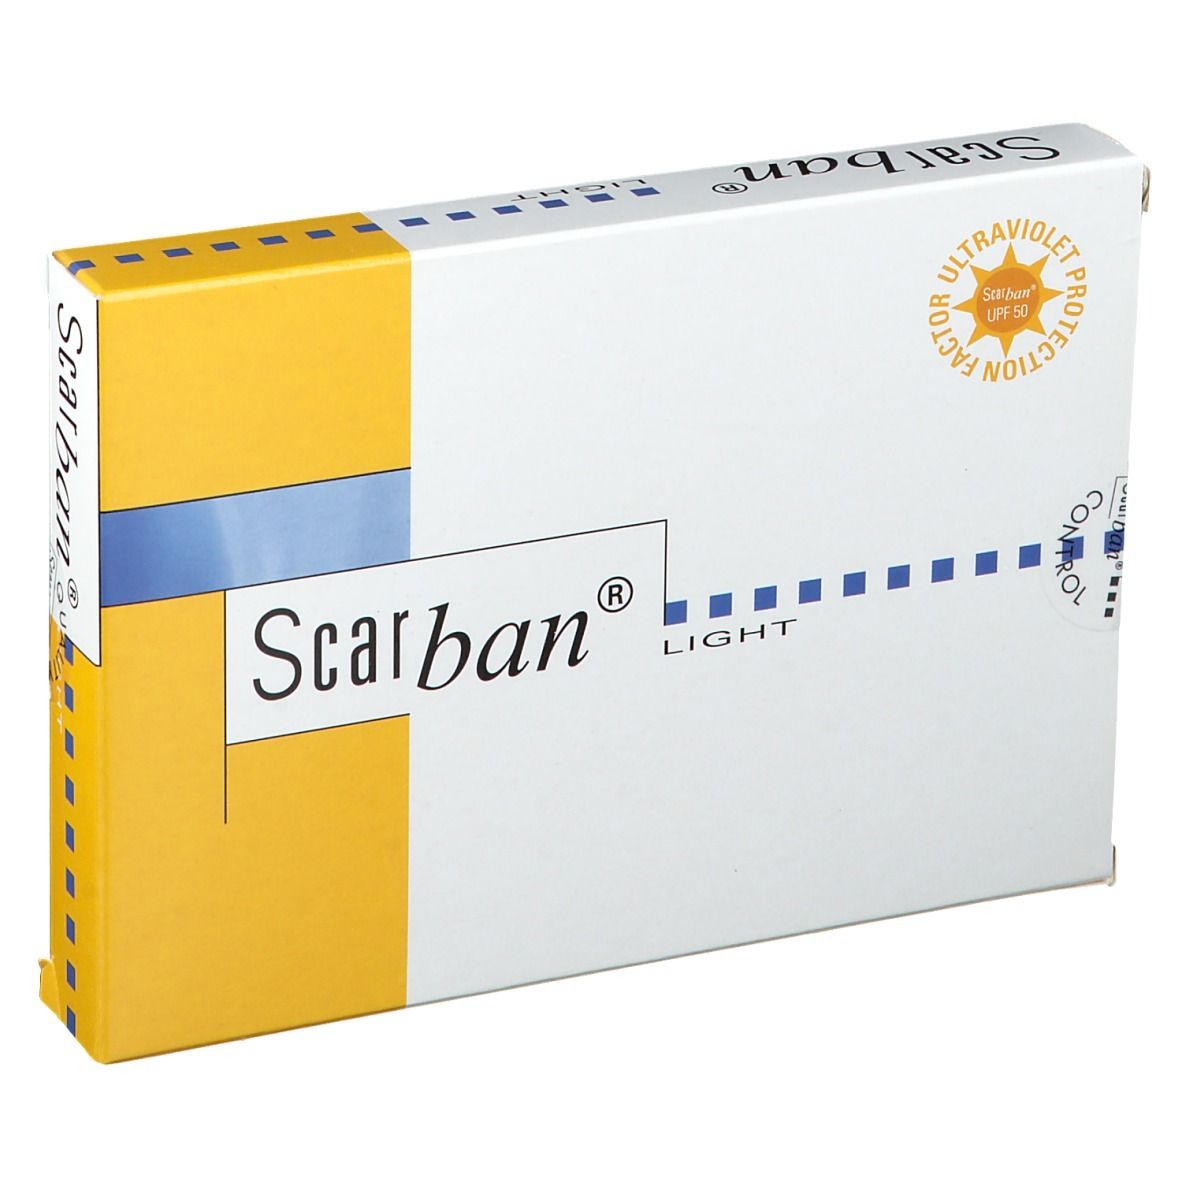 Scarban Light Silicone Sheet 10 cm x 15 cm